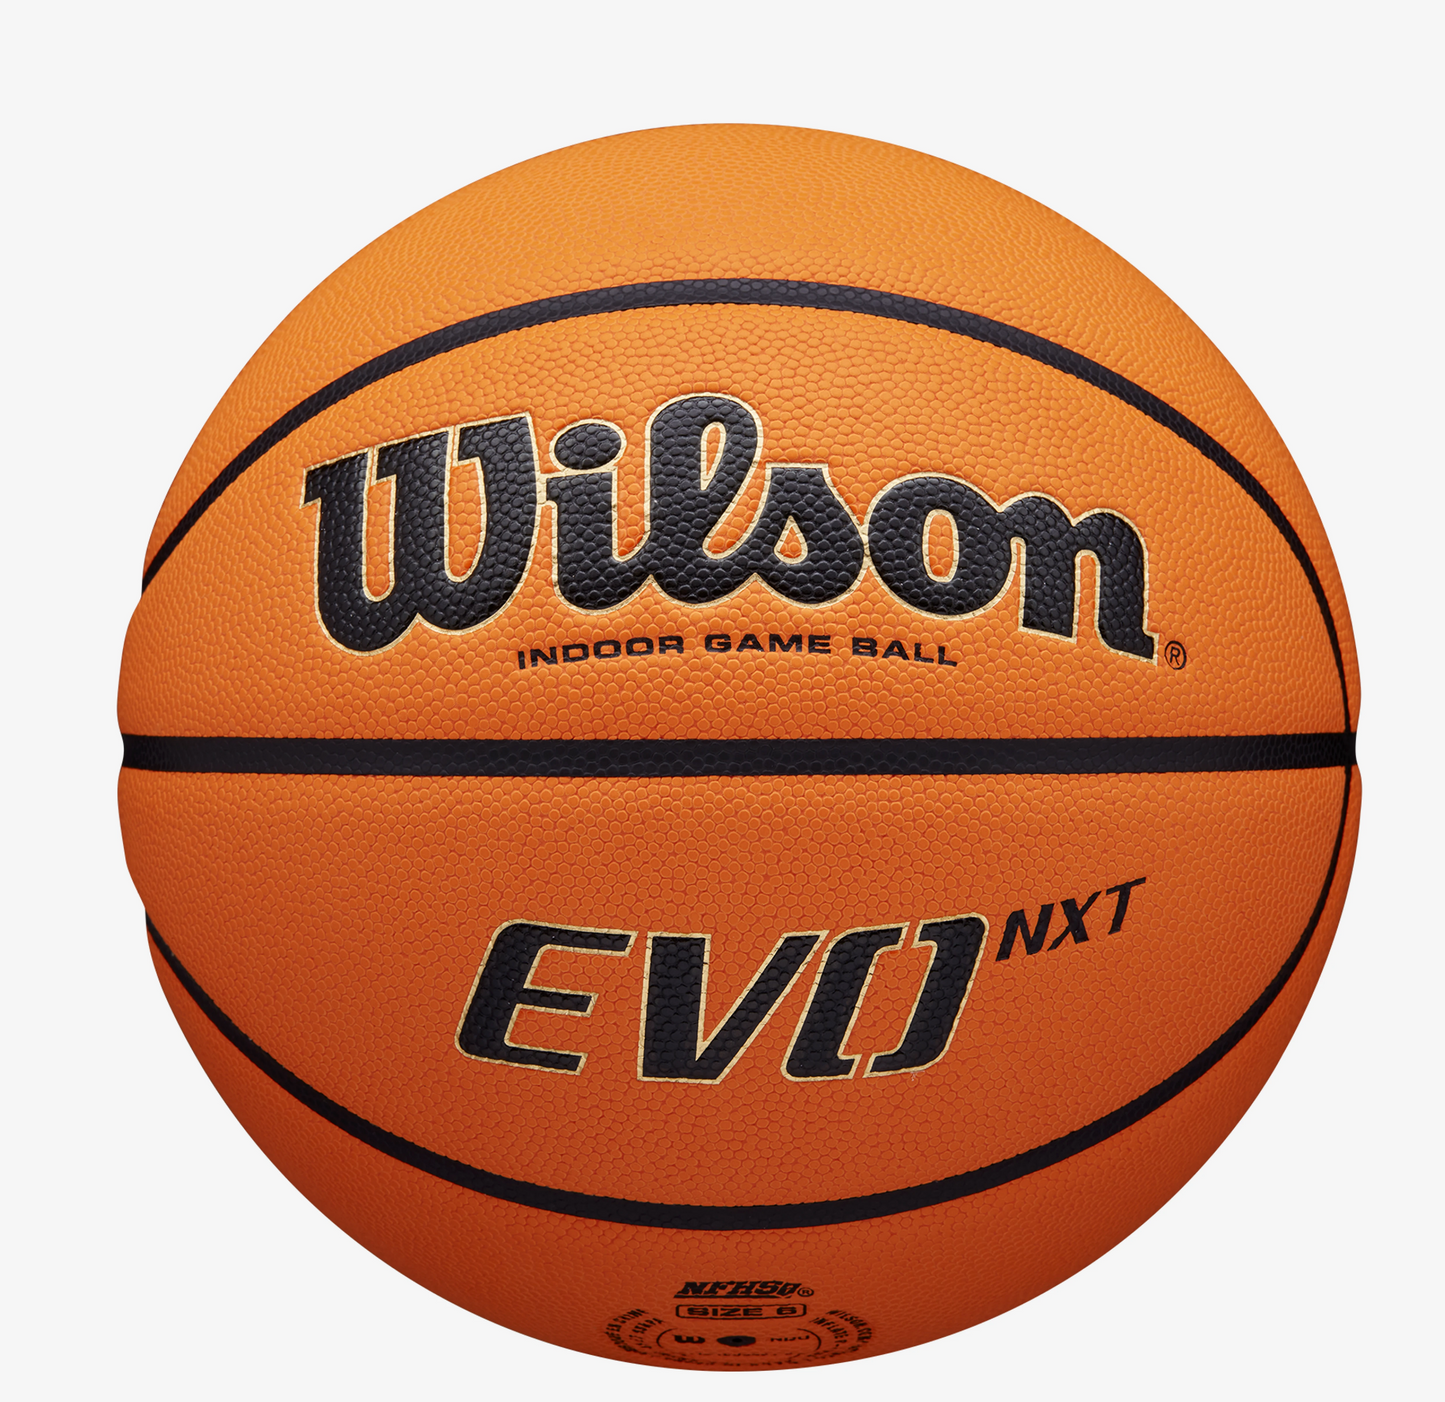 NCAA Evo NXT Official Game Ball Size 7